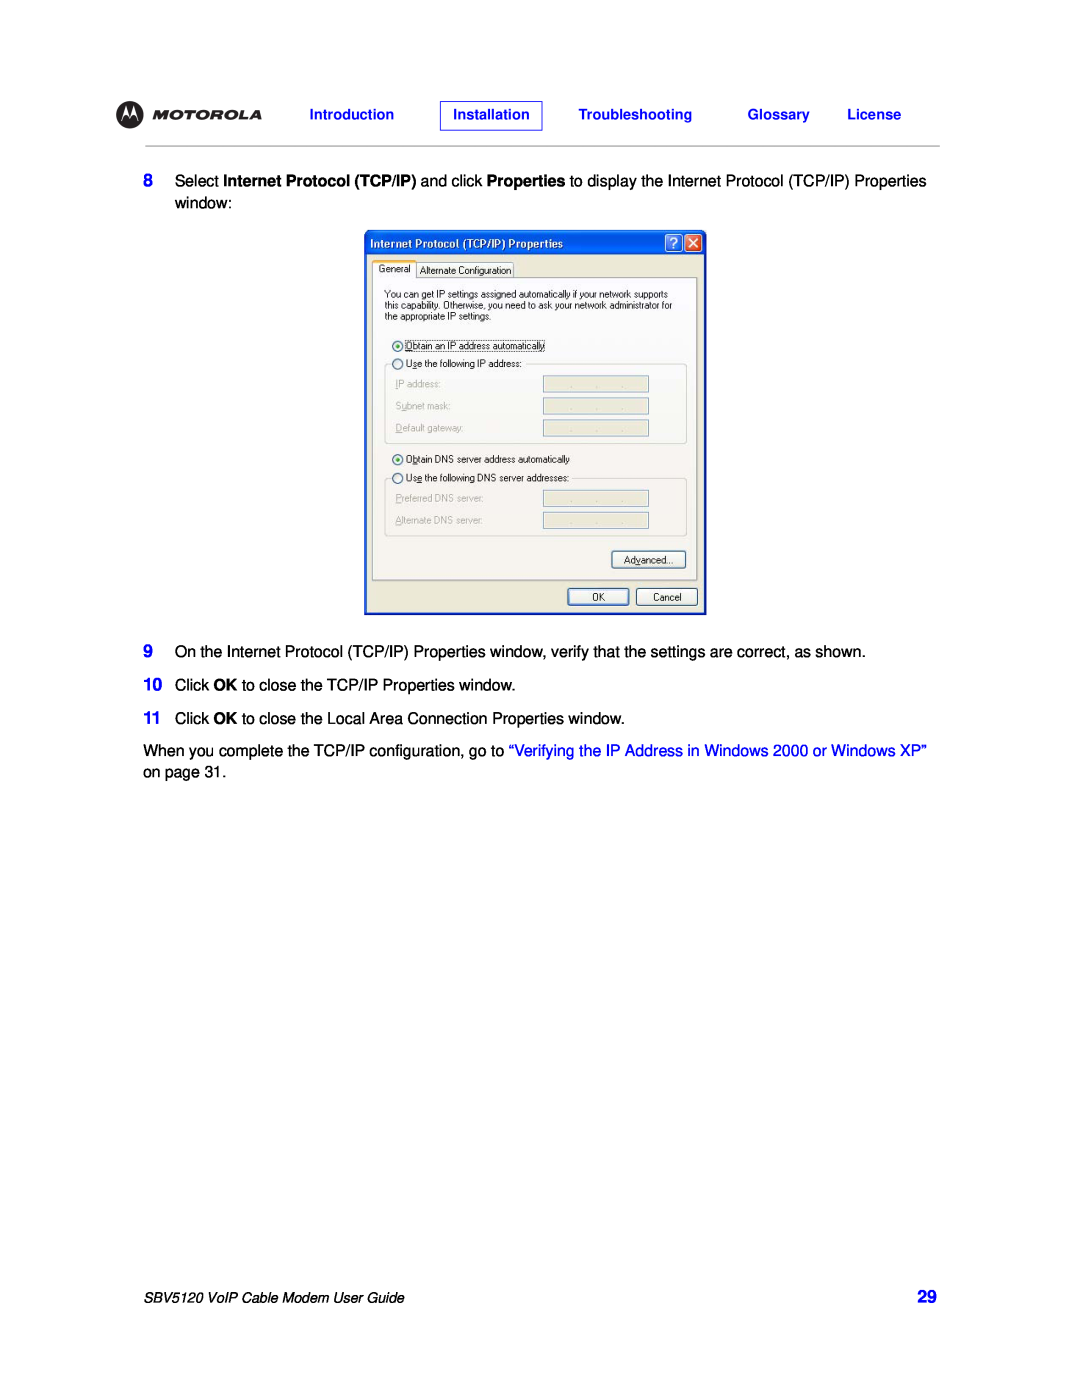 Motorola SBV5120 manual Click OK to close the TCP/IP Properties window 